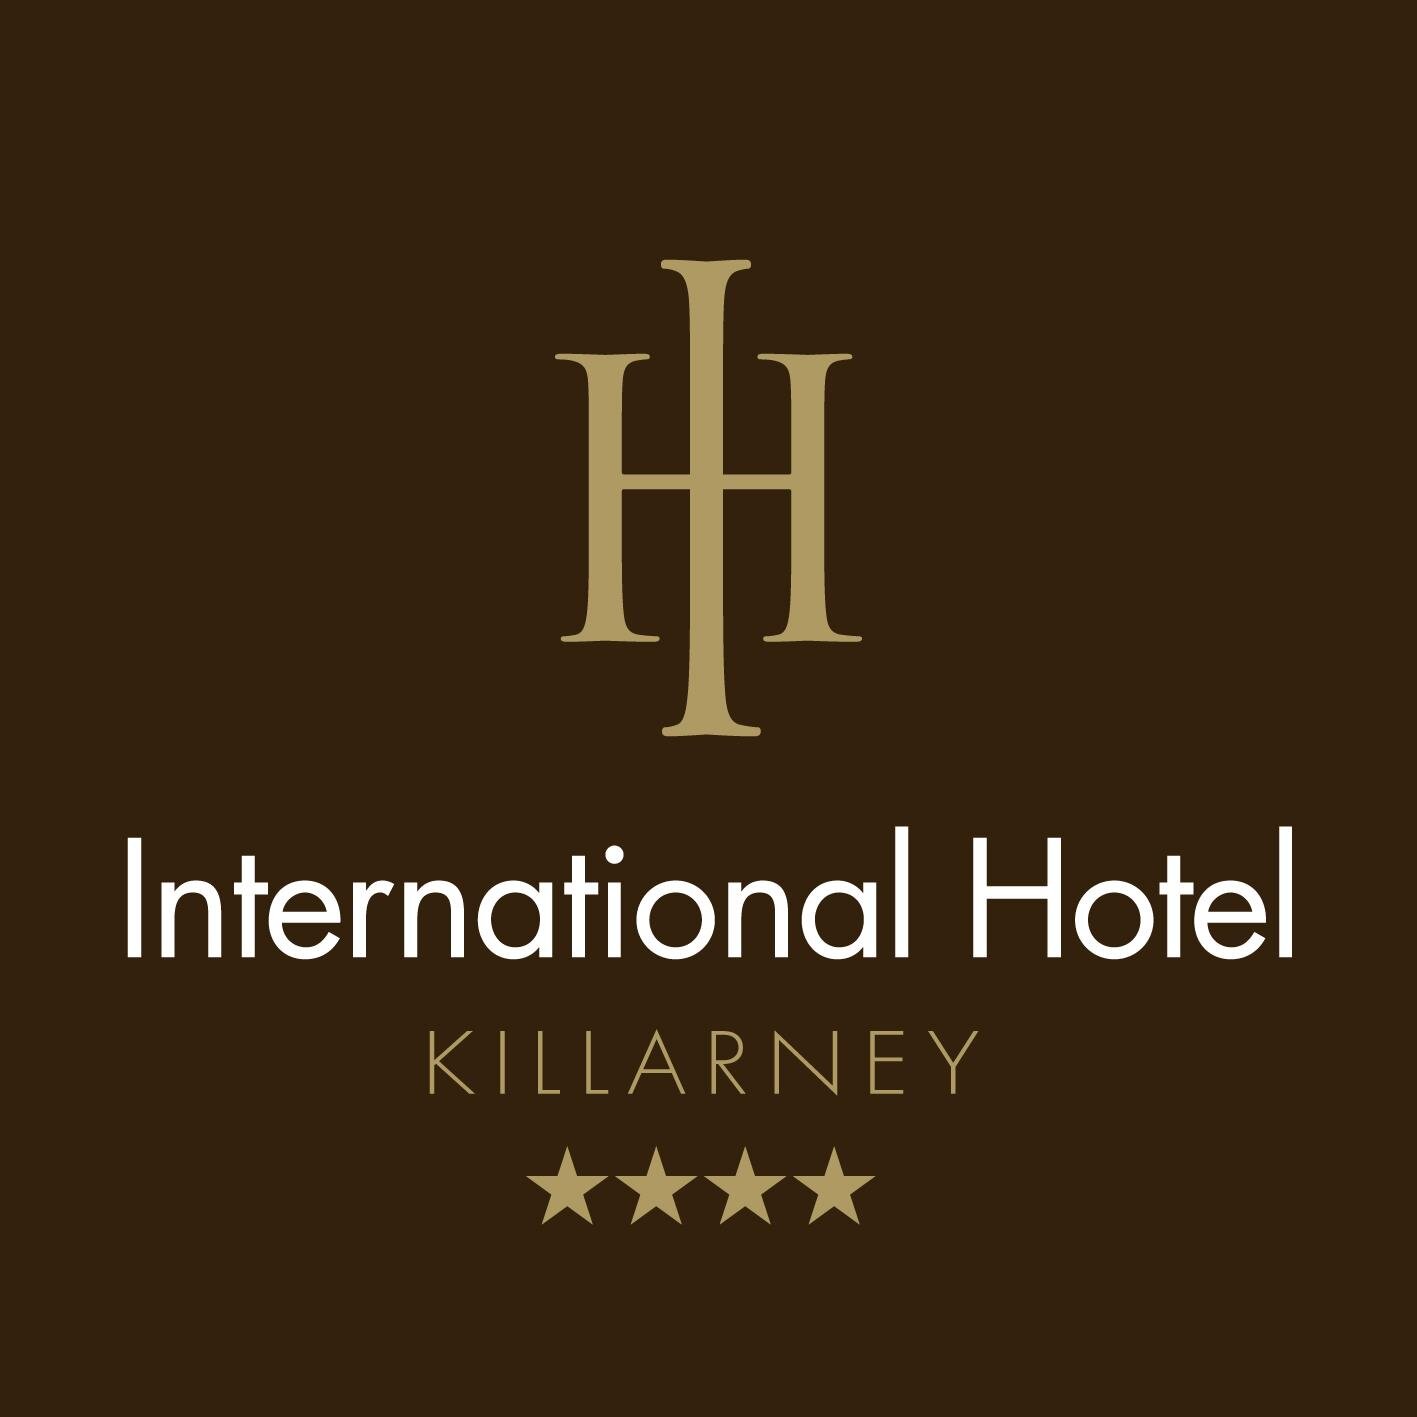 International Hotel Killarney